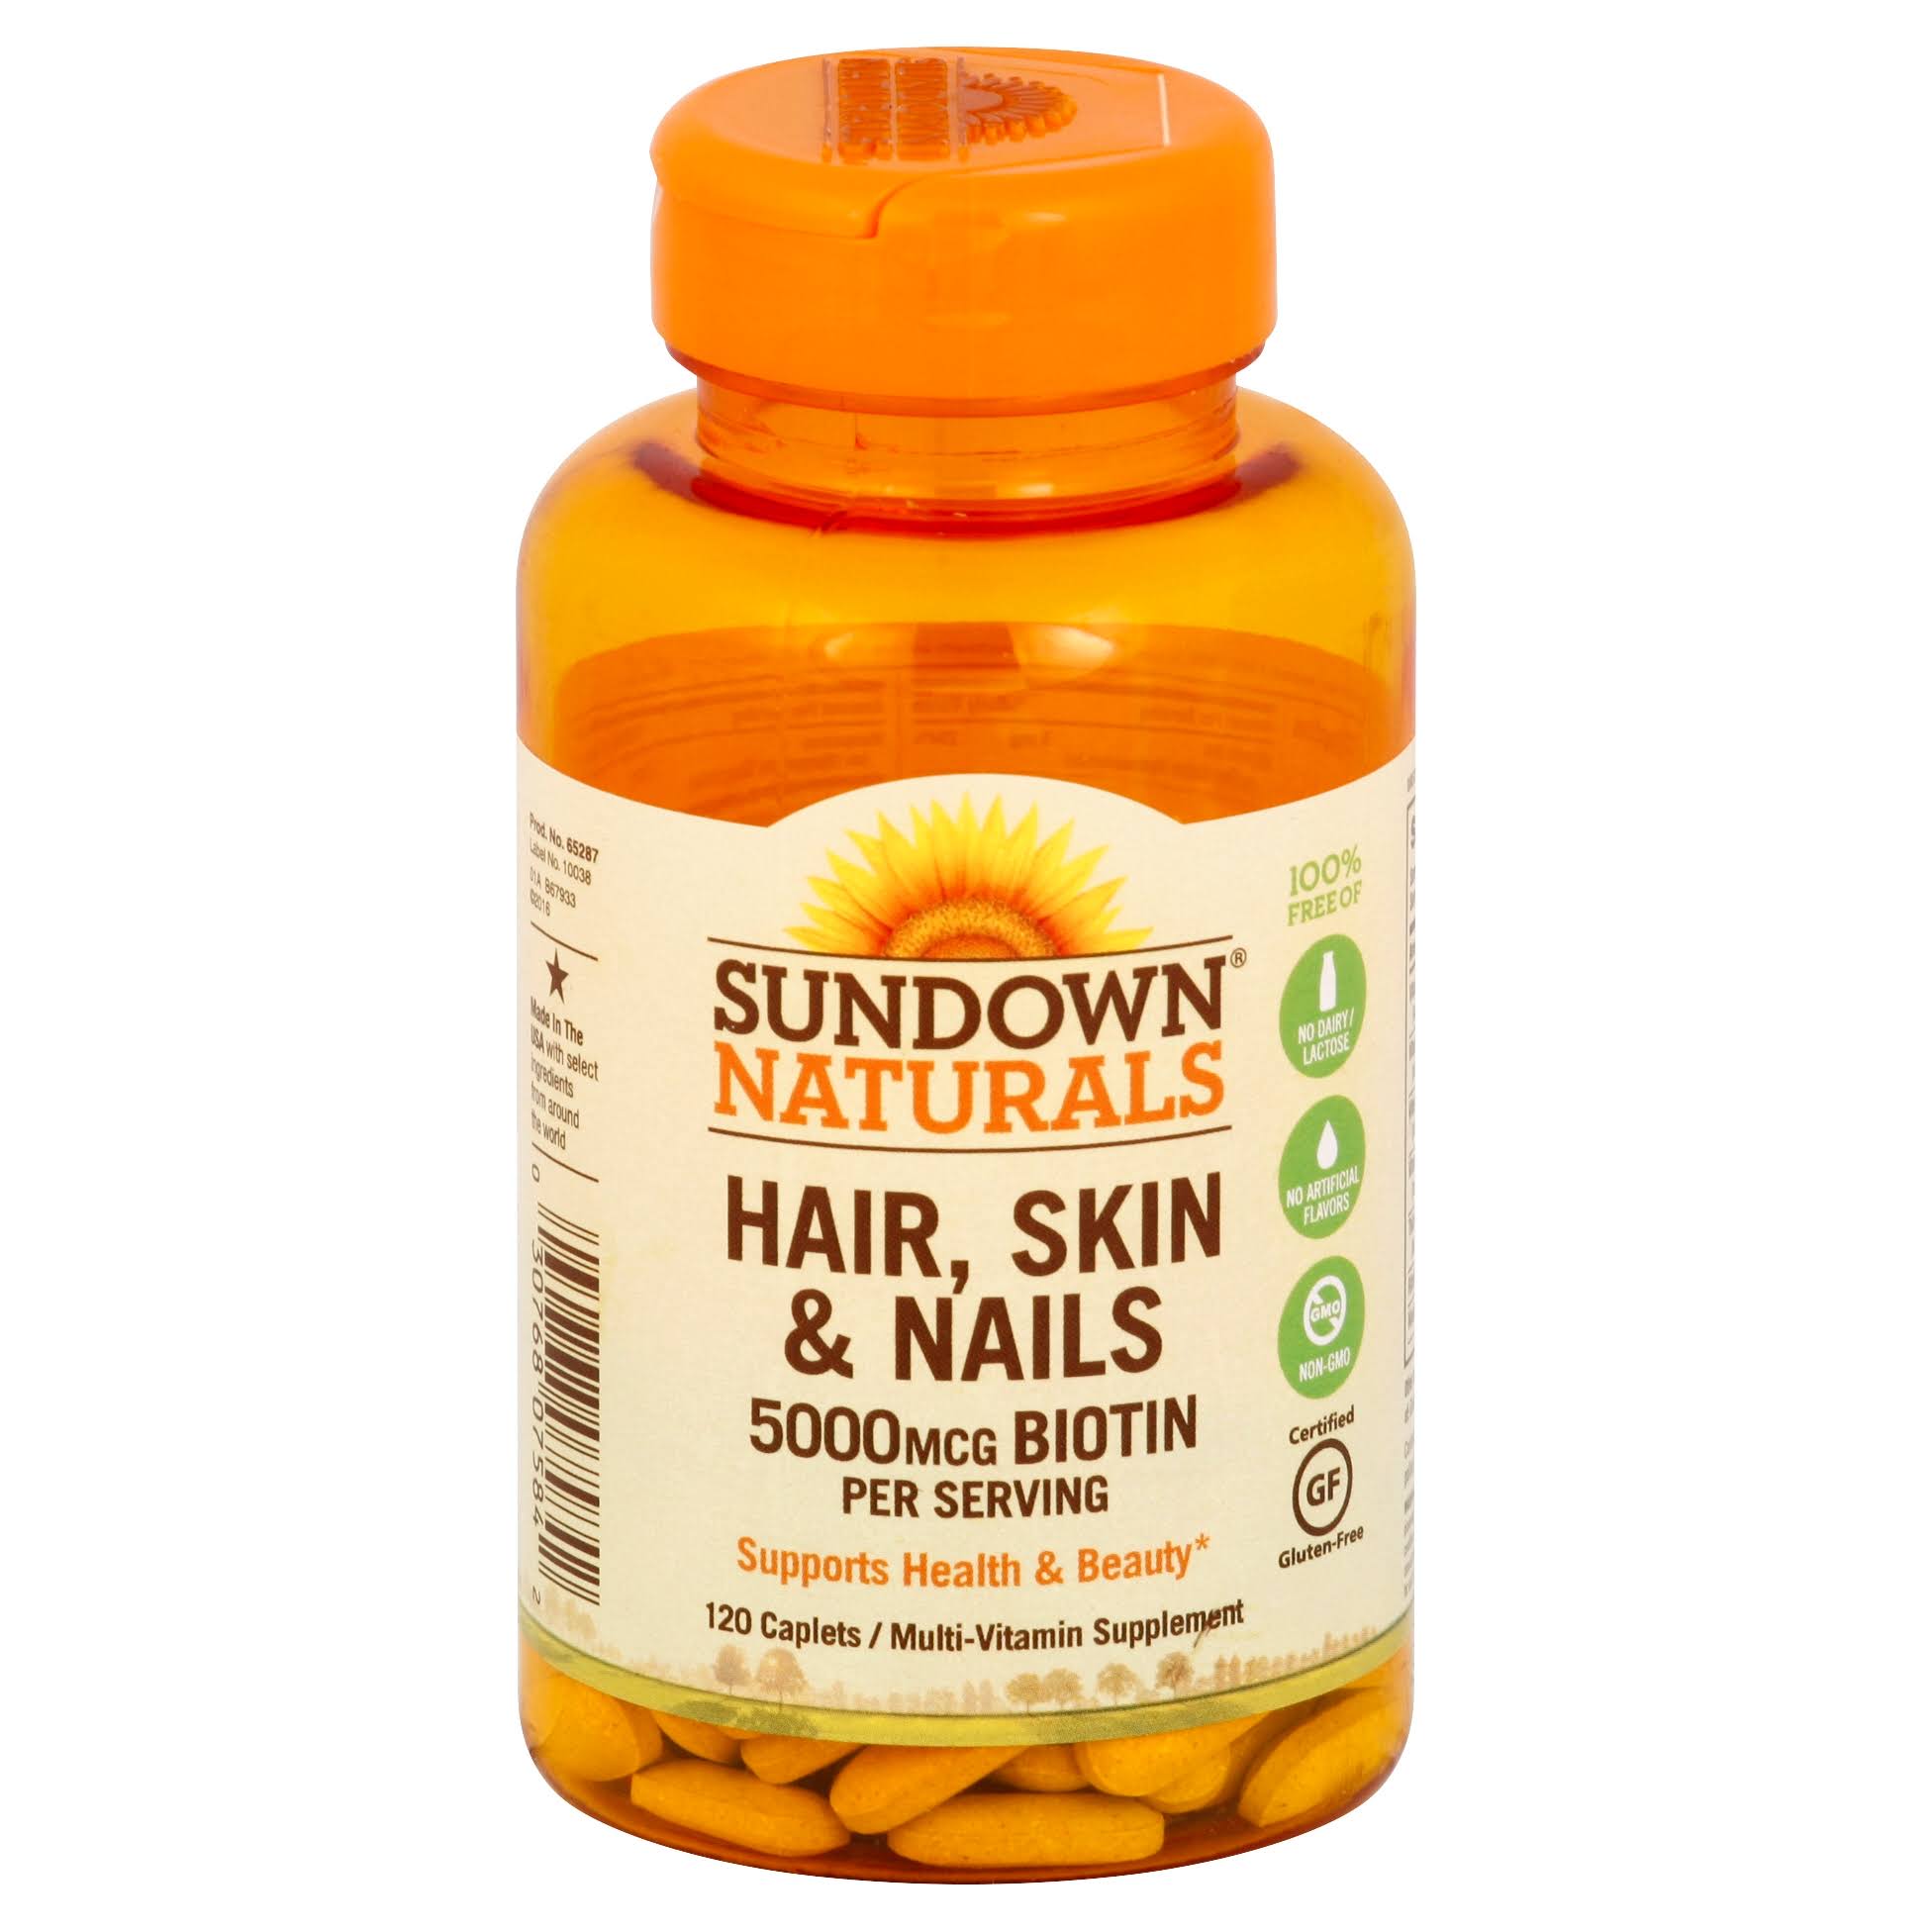 Sundown Naturals Hair Skin & Nails Dietary Supplement - 120 Caplets, 5000mcg